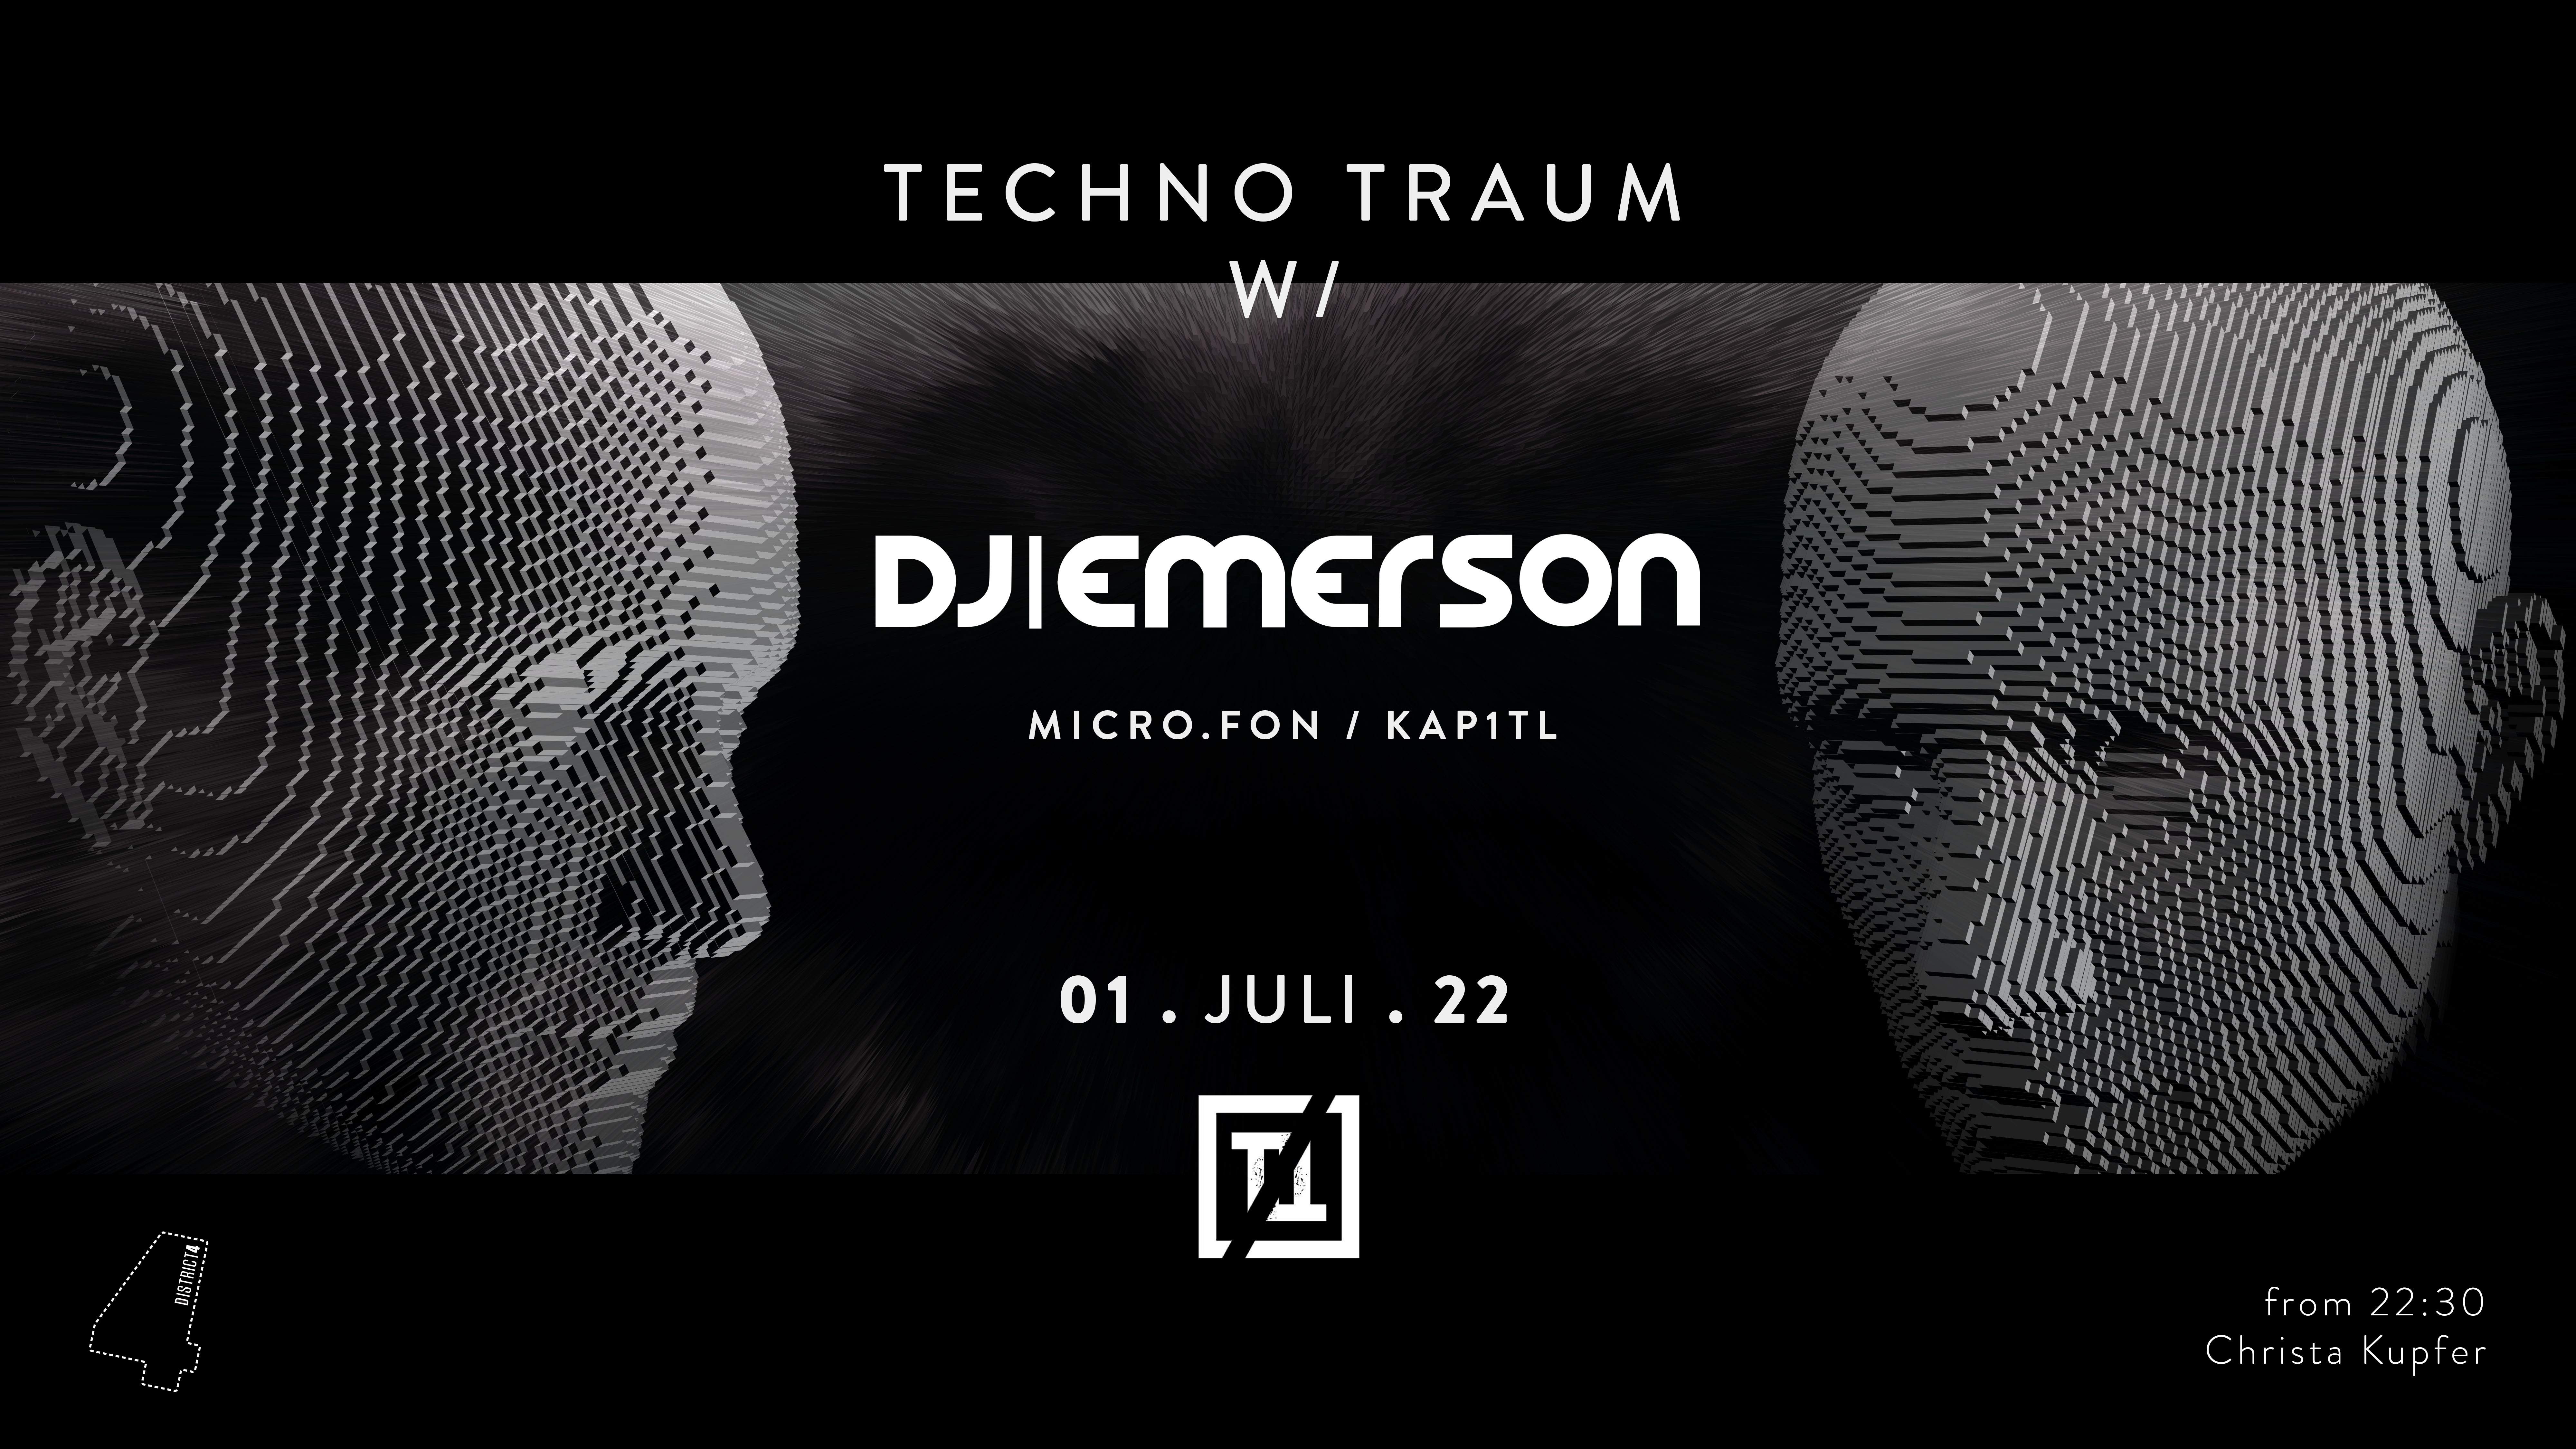 Techno Traum w / DJ Emerson [ Micro.fon - Kap1tl ] - フライヤー表